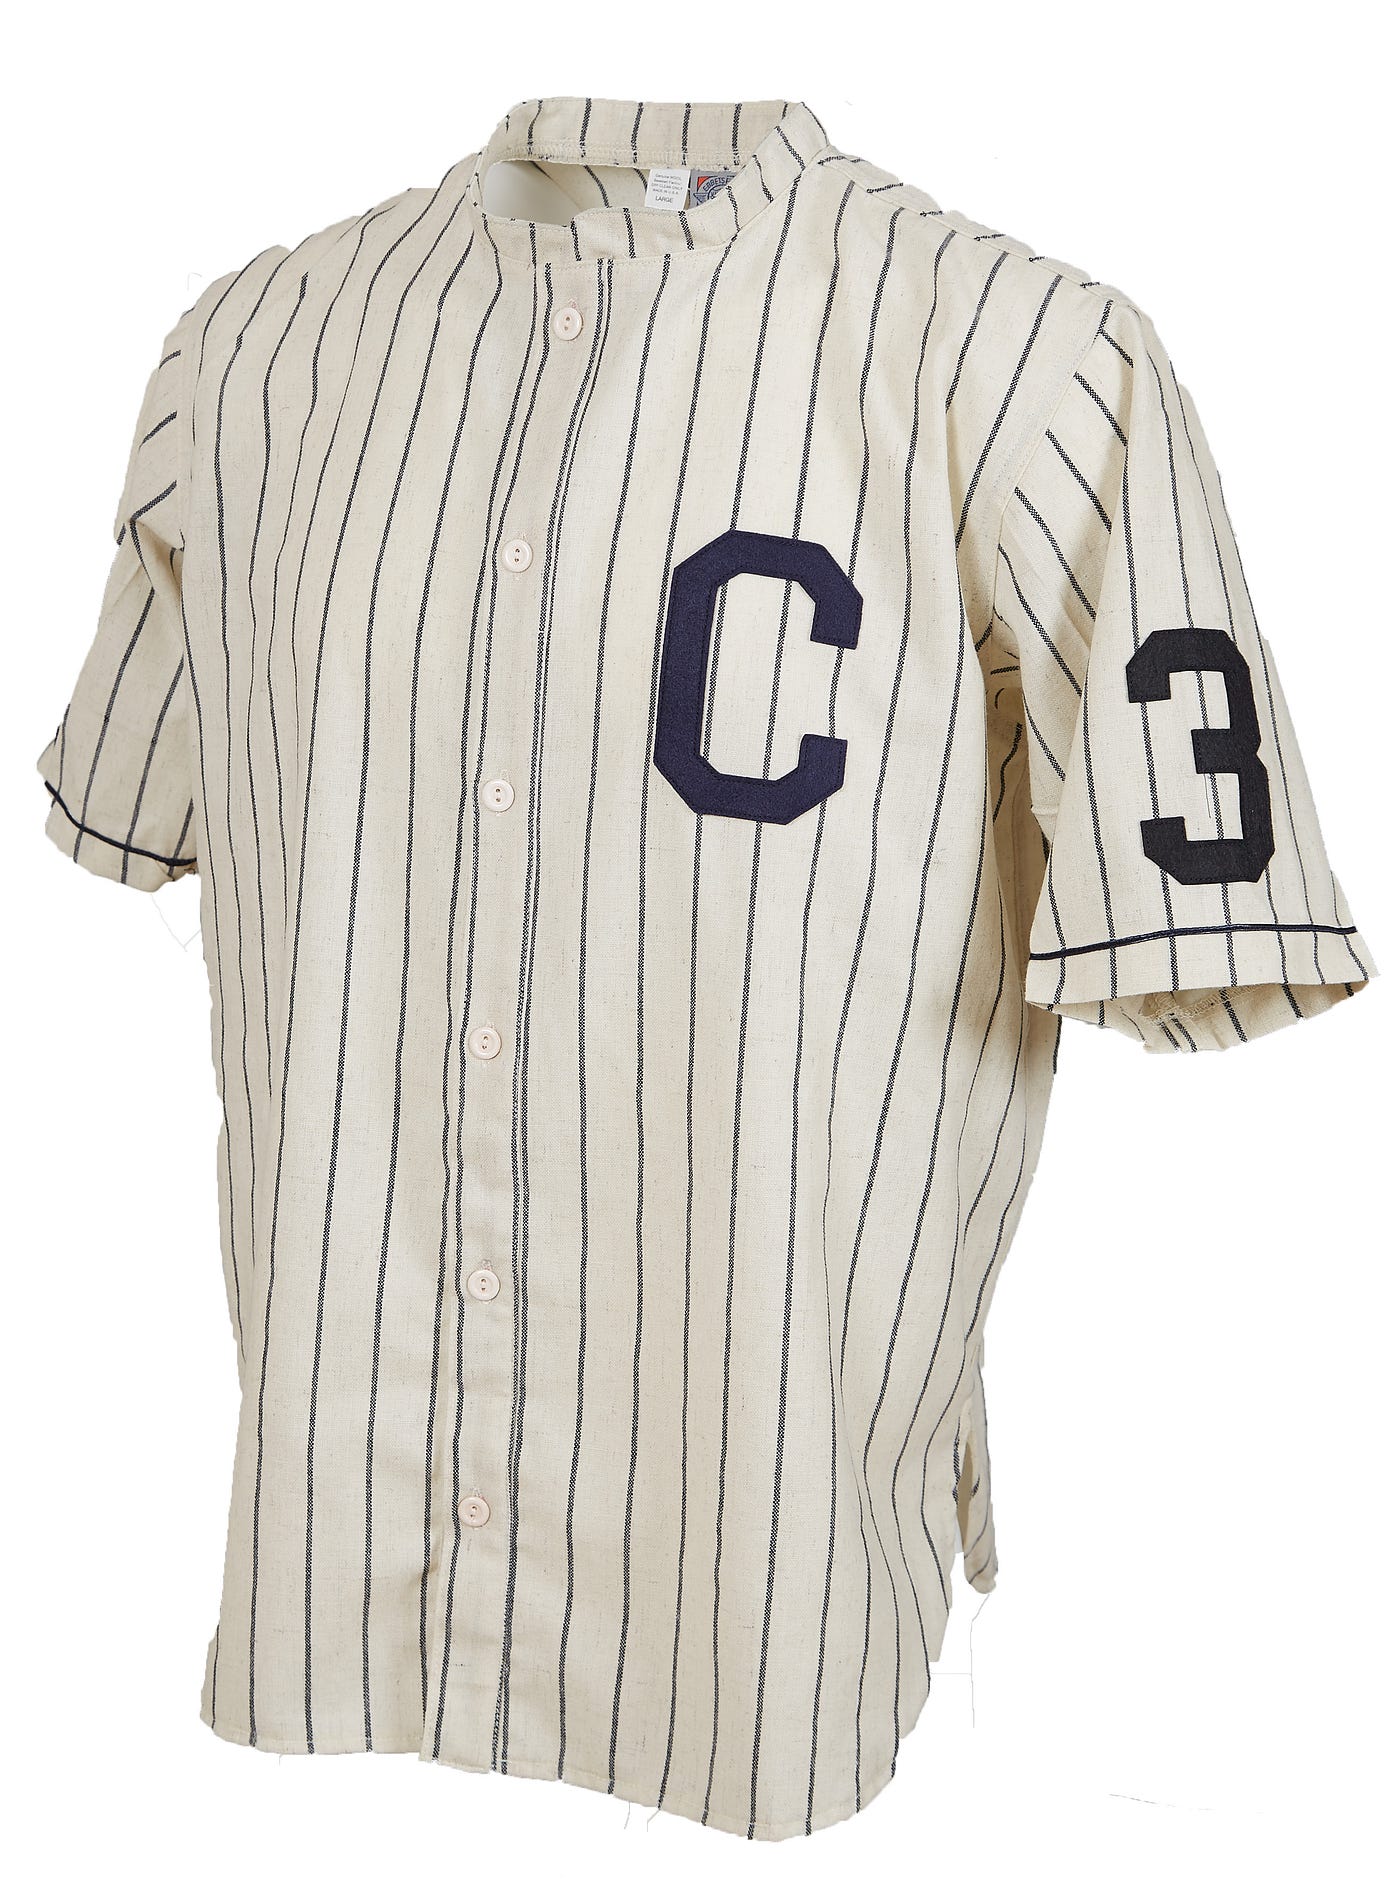 Cleveland Indians were first MLB team to wear numerals on uniforms